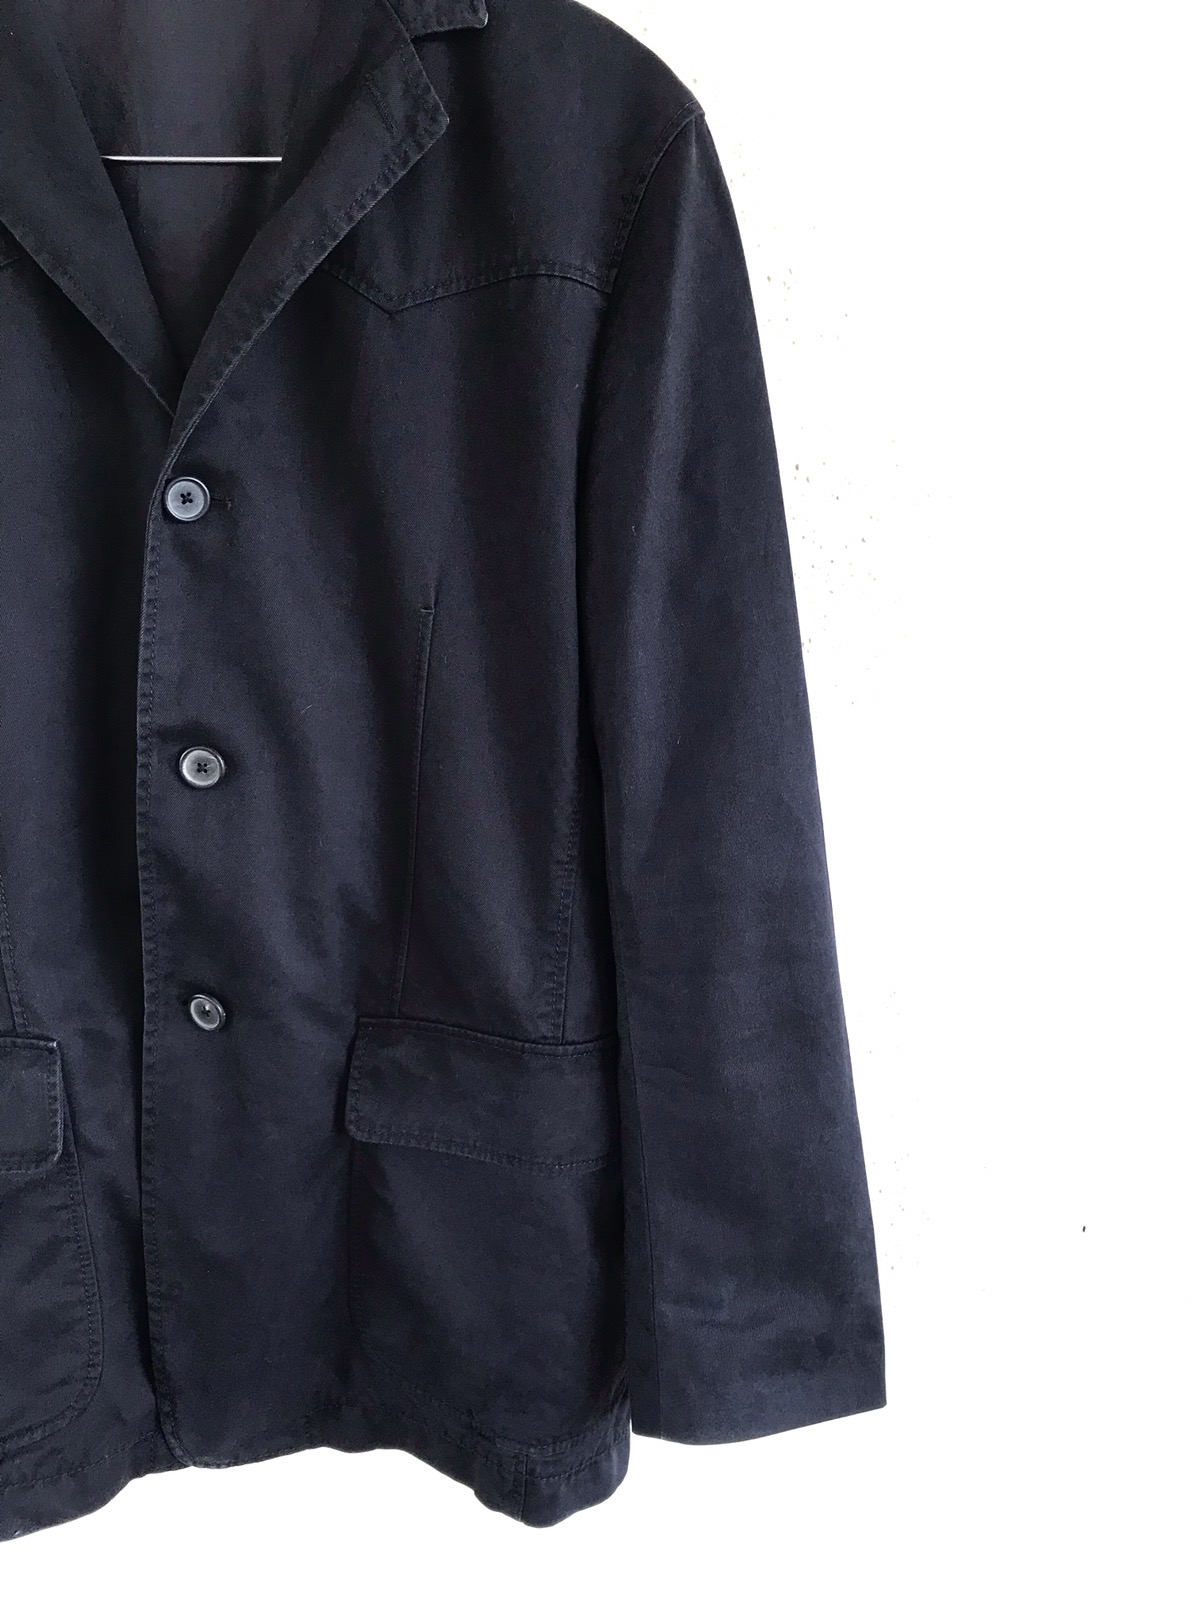 Jil Sander Black Jacket Blazer Made in Italy - 4